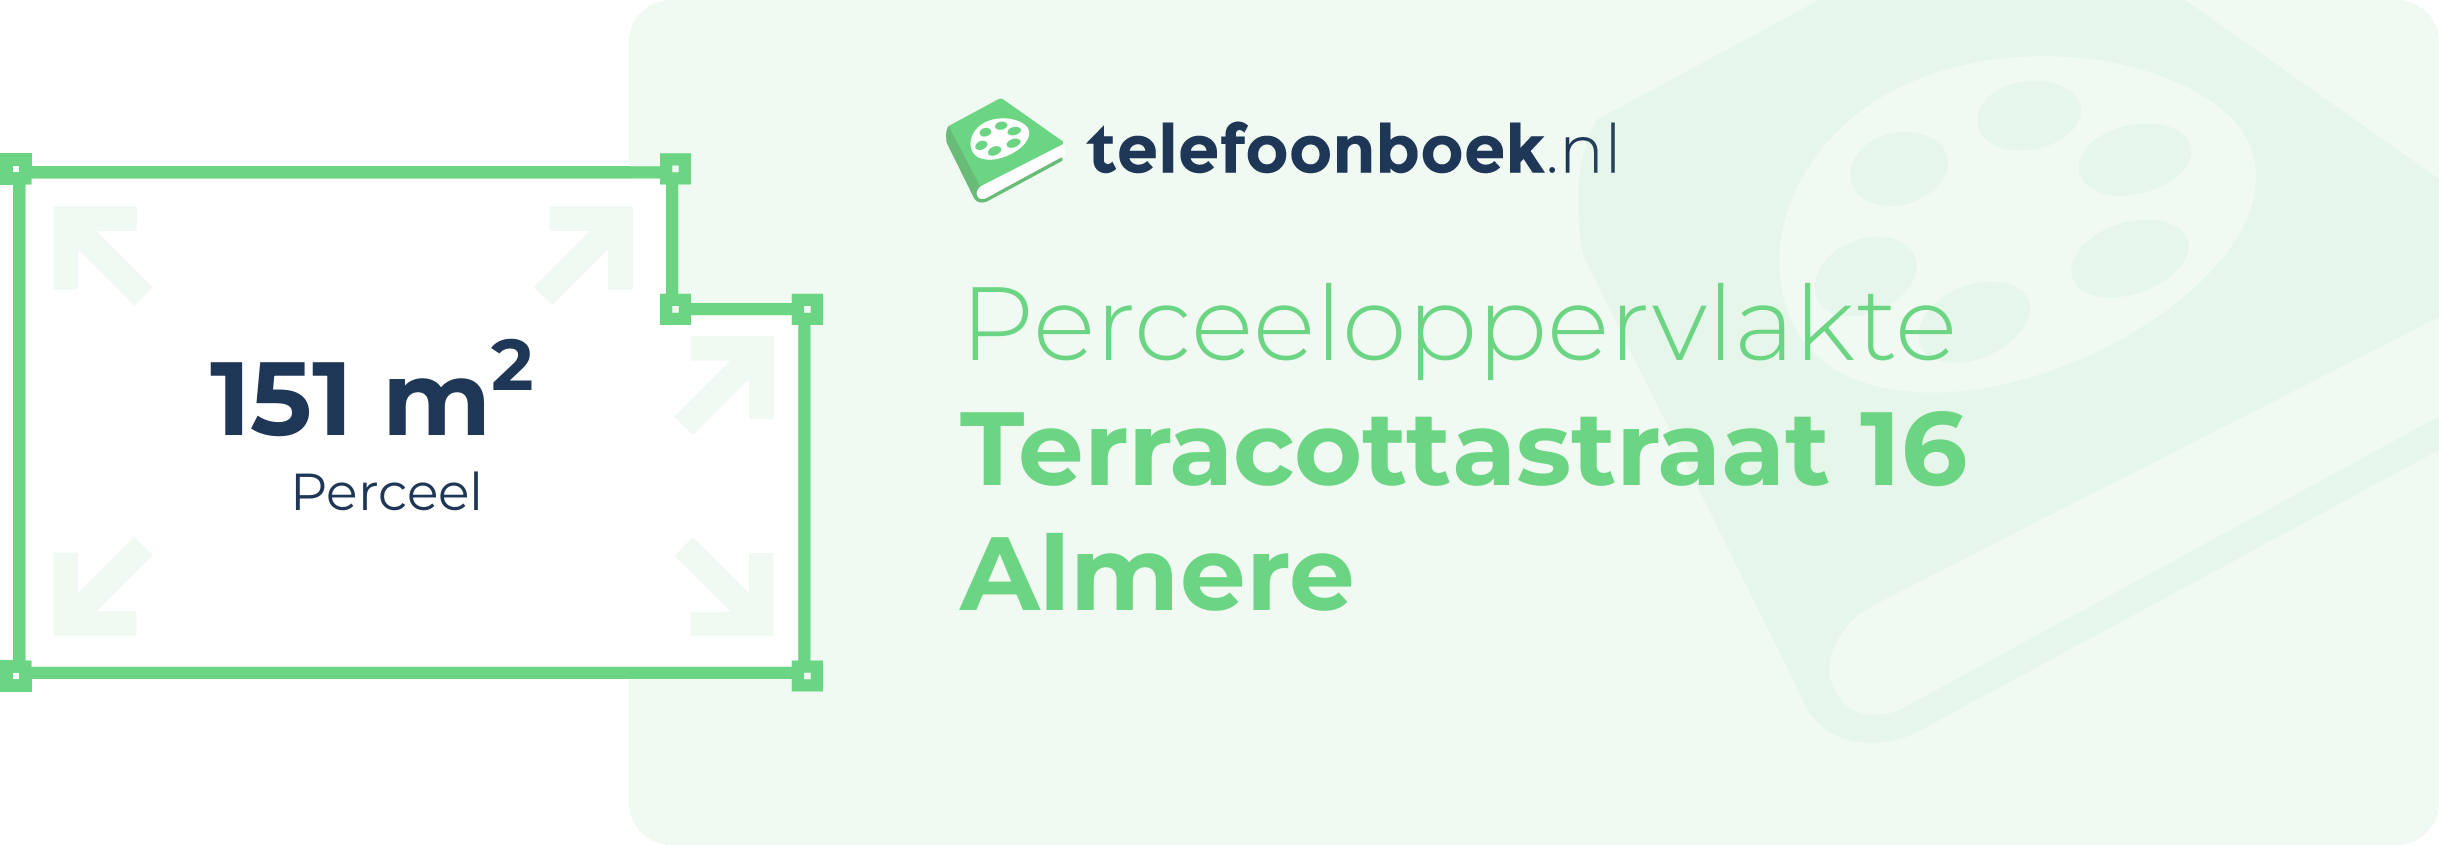 Perceeloppervlakte Terracottastraat 16 Almere